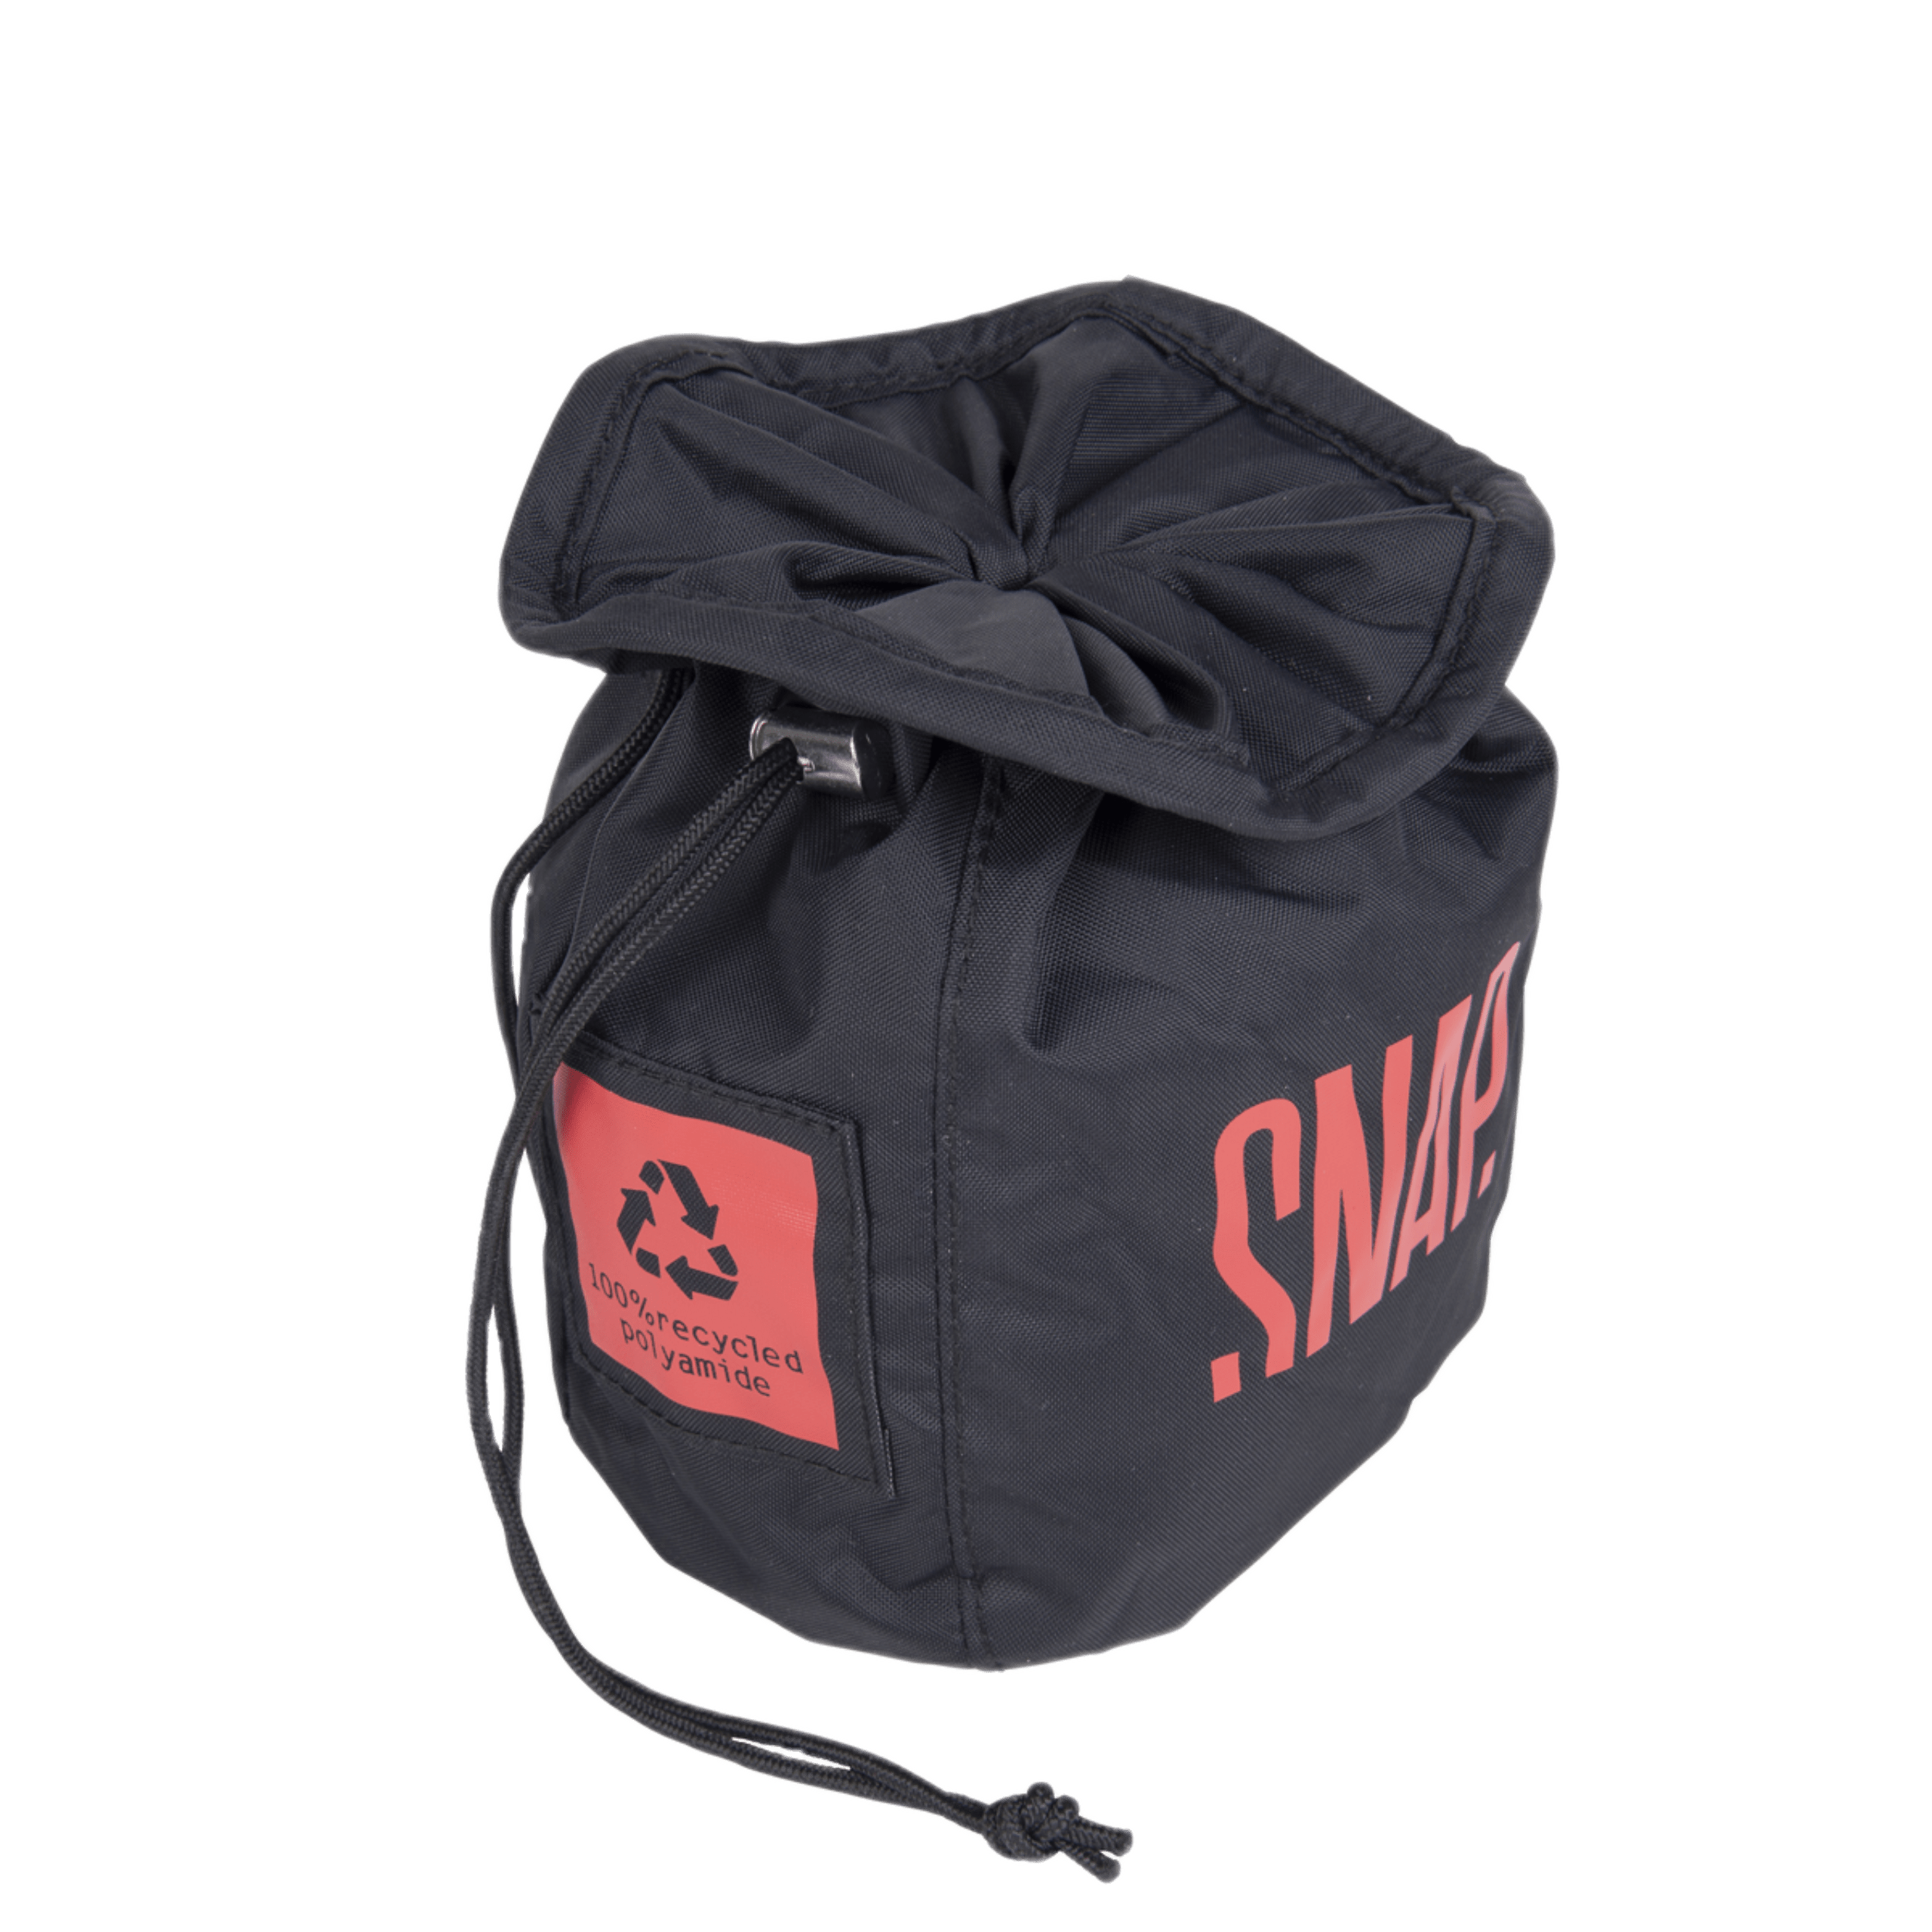 Snap_chalk-bags_SML024